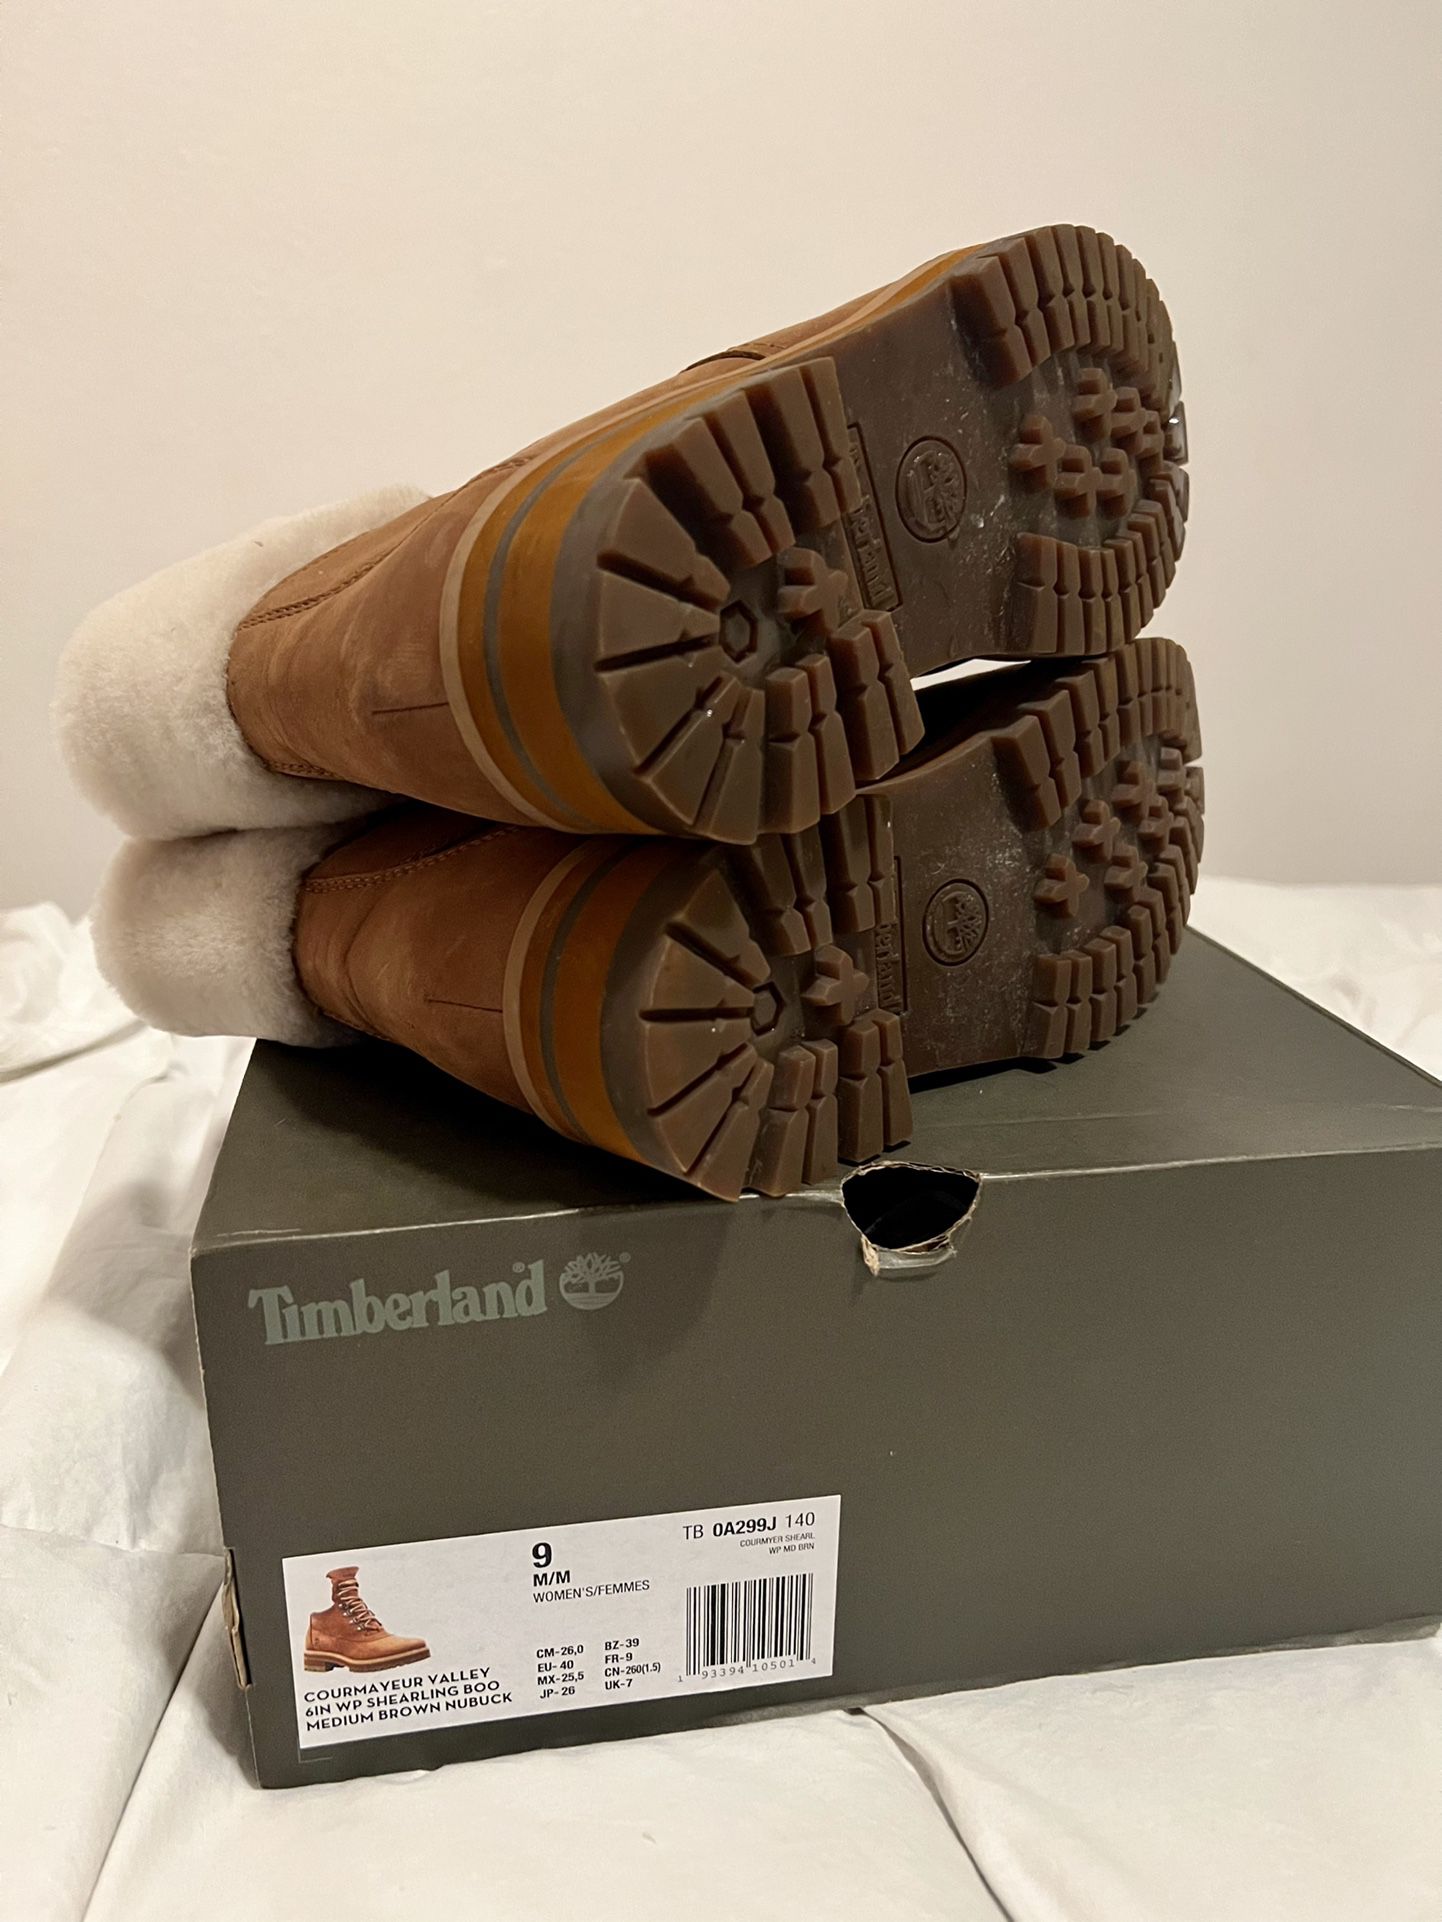 Timberland - Courmayeur Valley 6in Waterproof Shearling Boot Sz 9